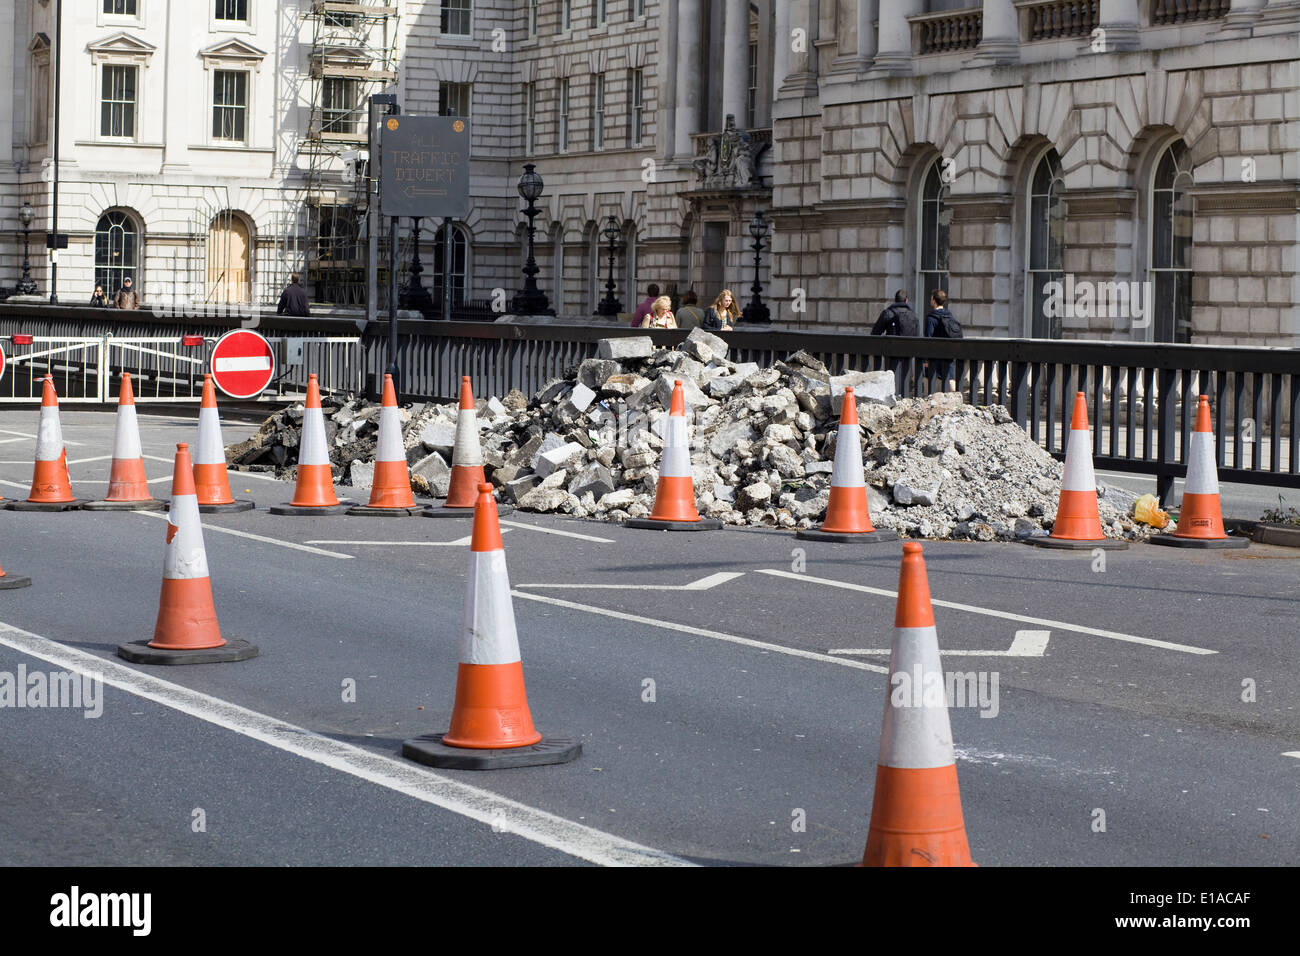 Cônes de circulation et road closed sign in London England Banque D'Images